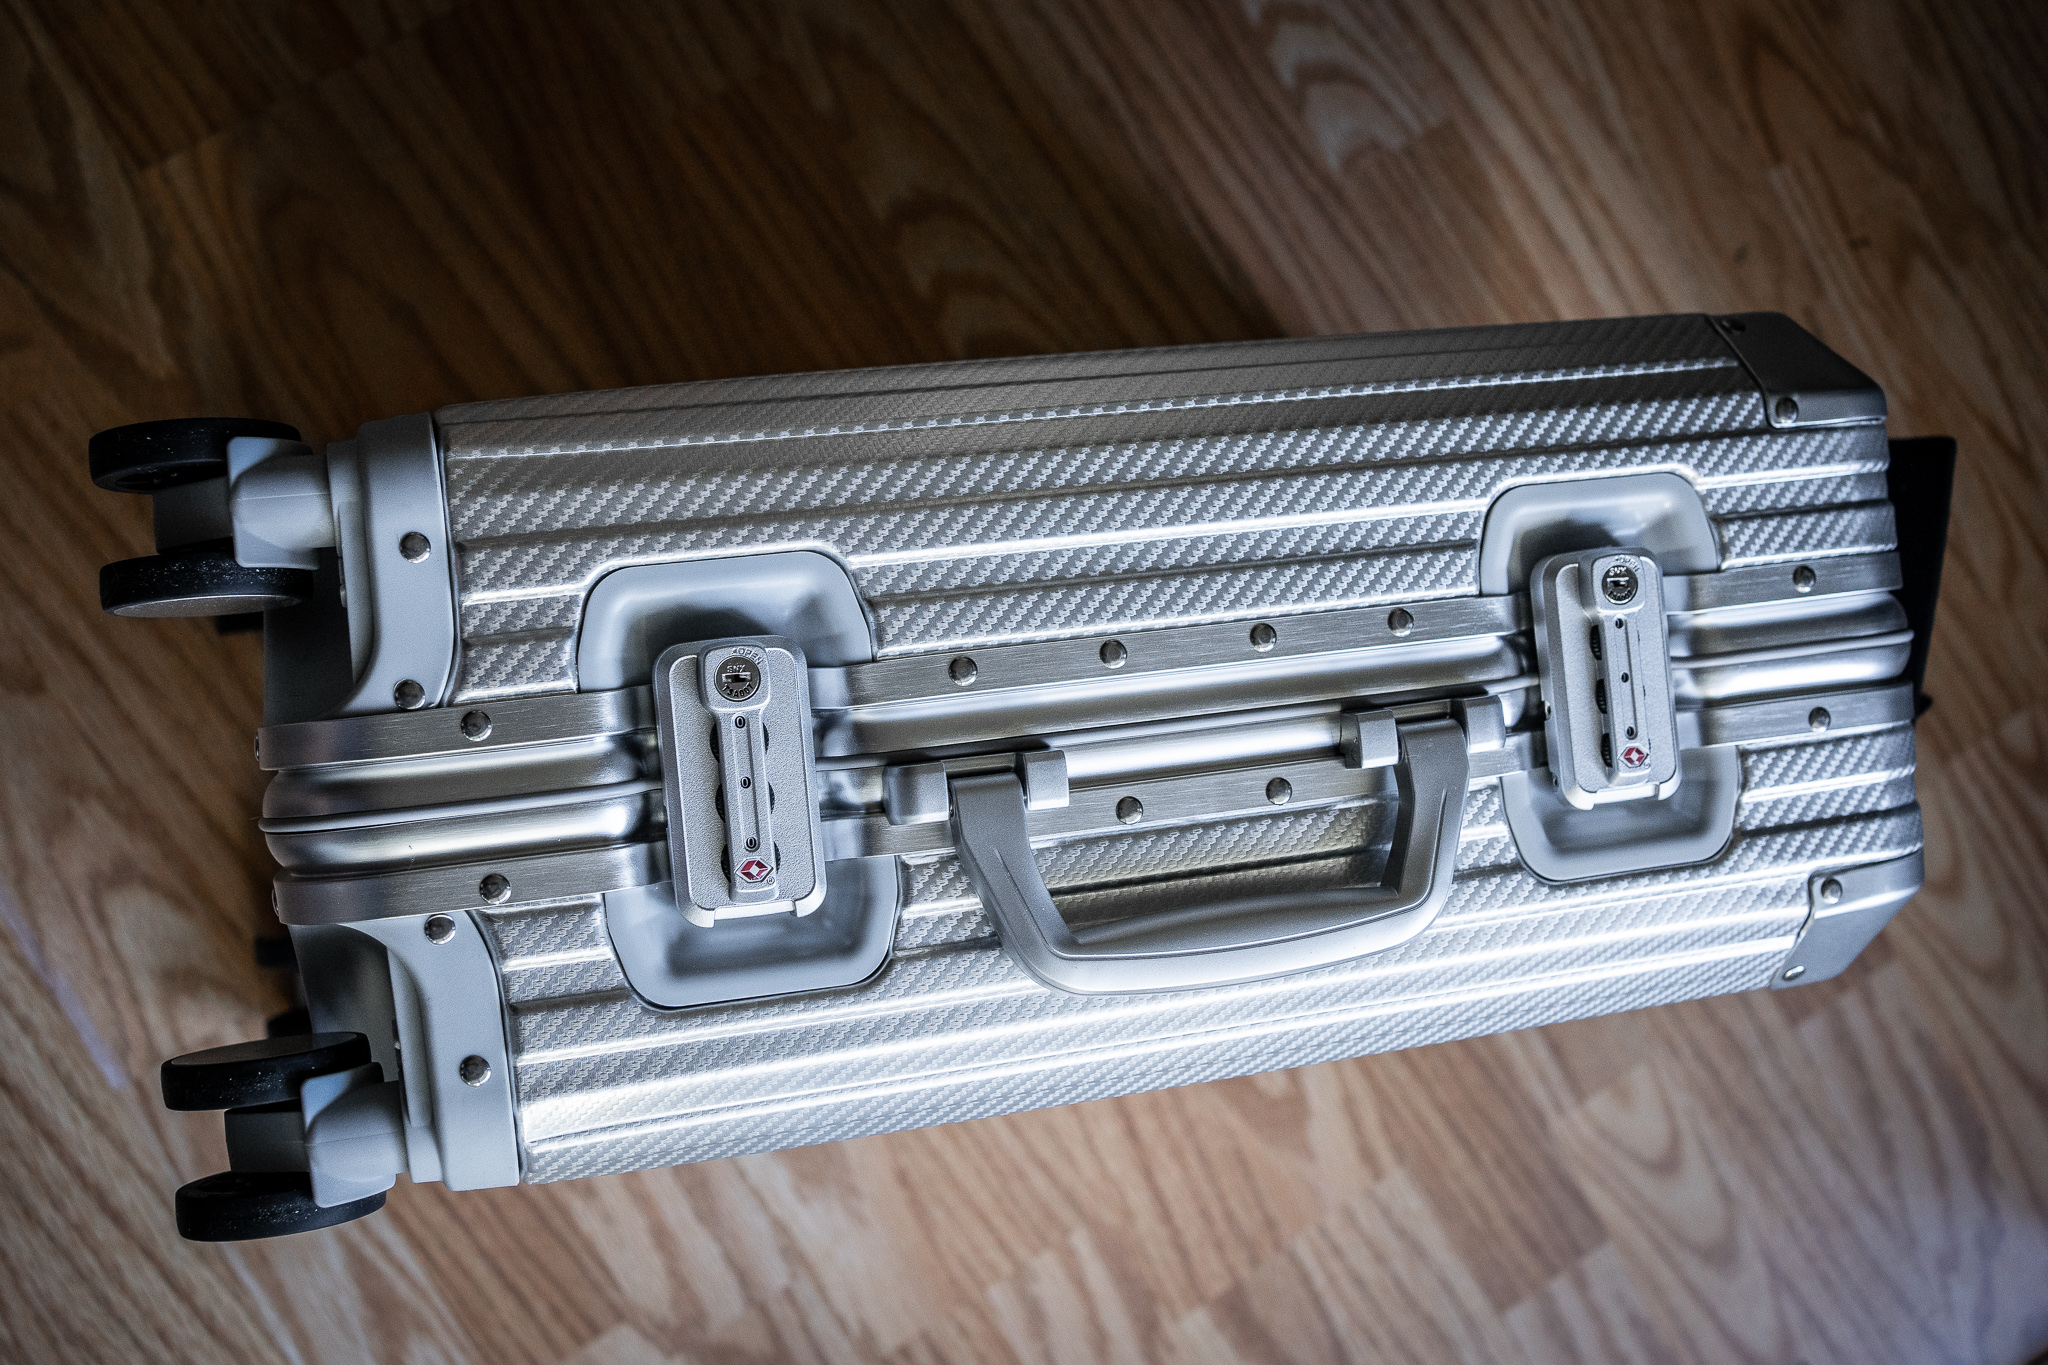 MVST Review Carry-on Trek Aluminum Suitcase suitcase clasps